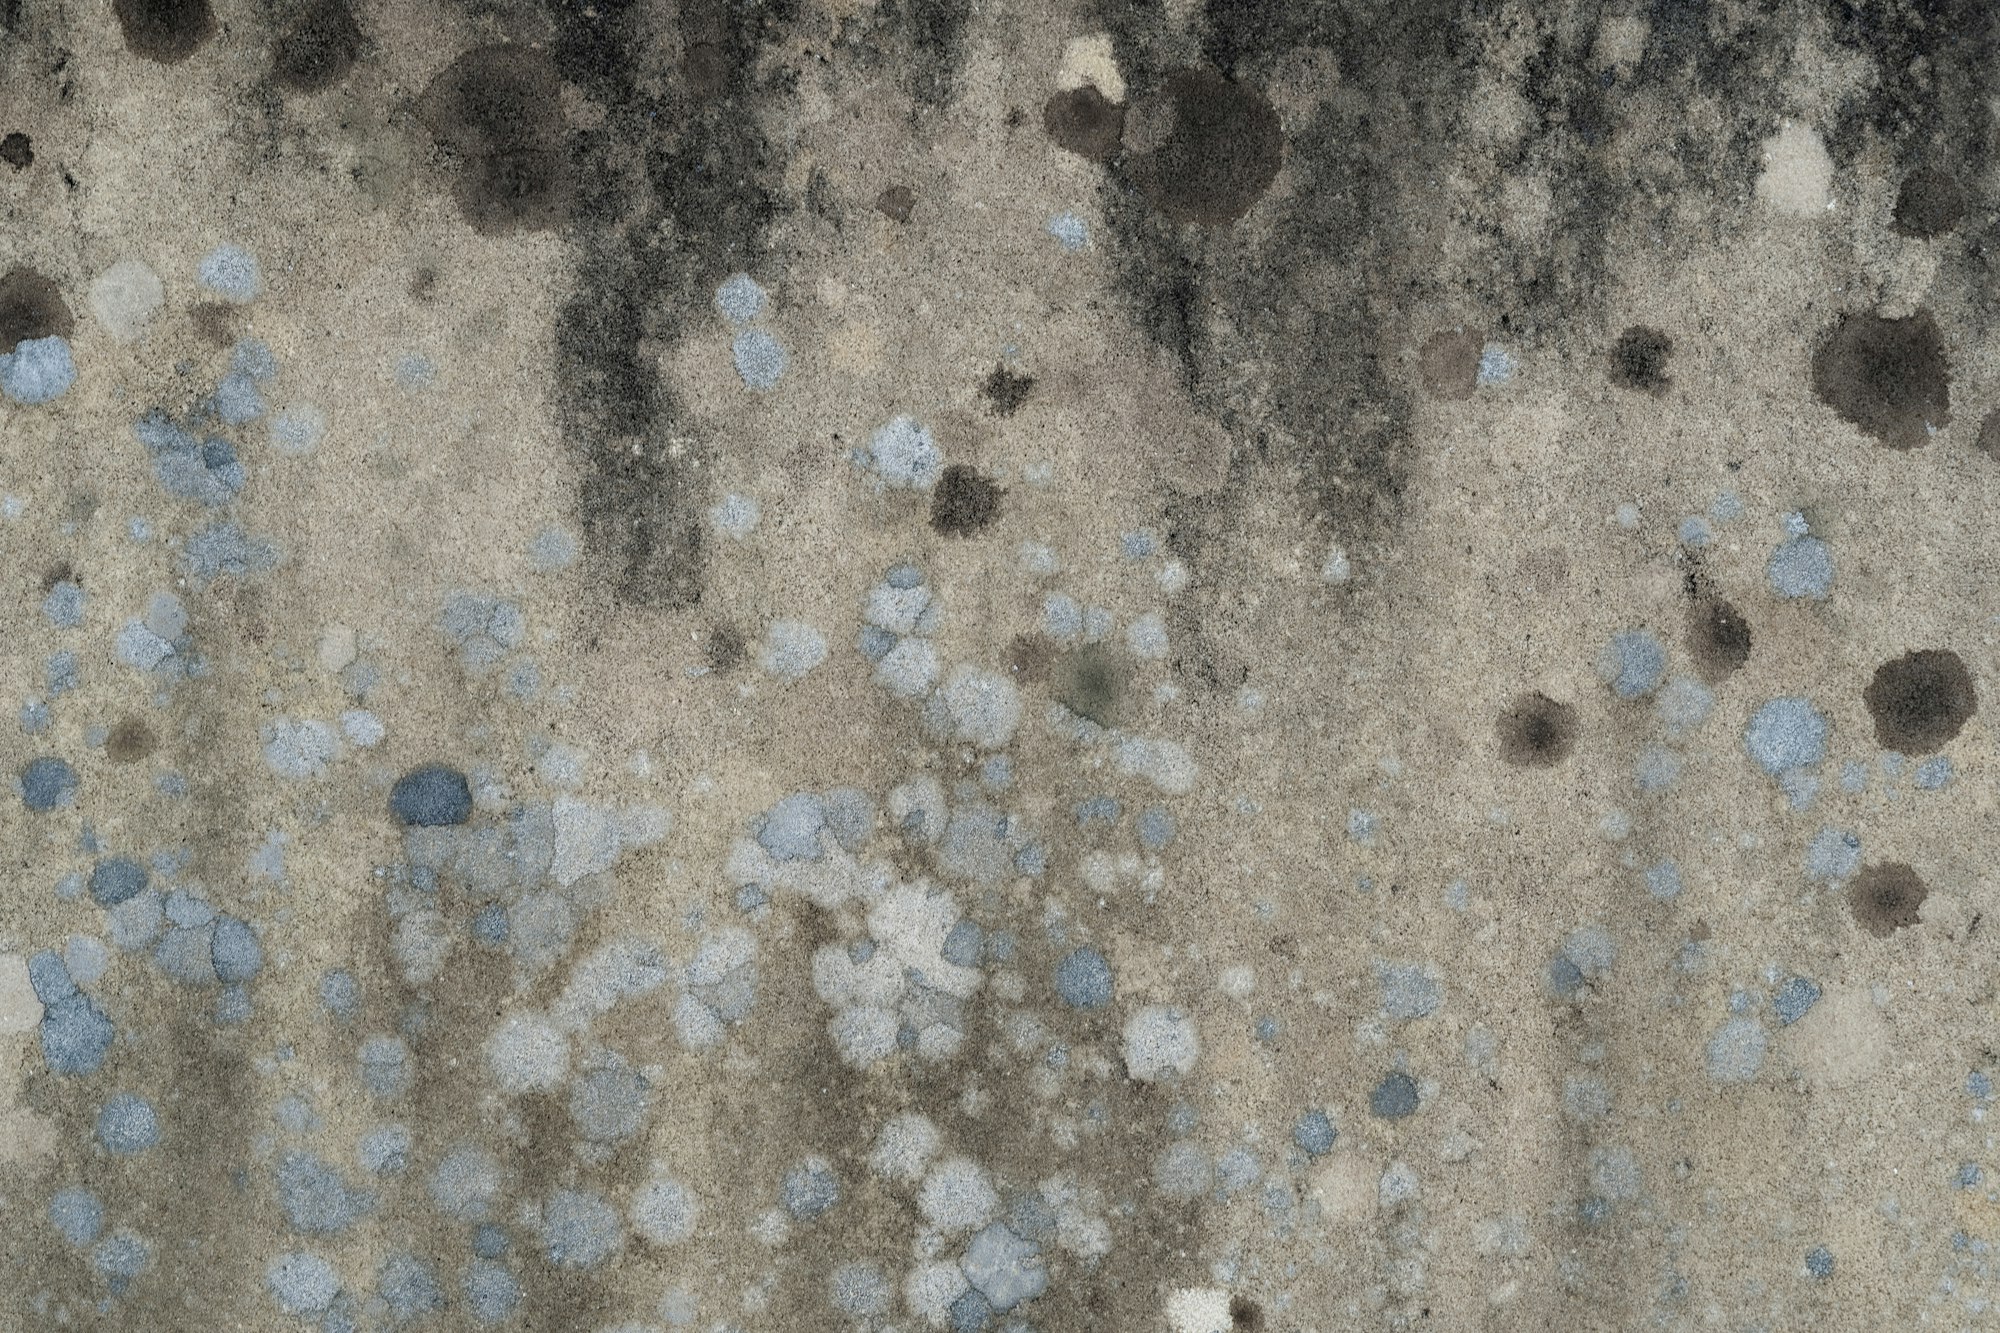 Lichen On Concrete